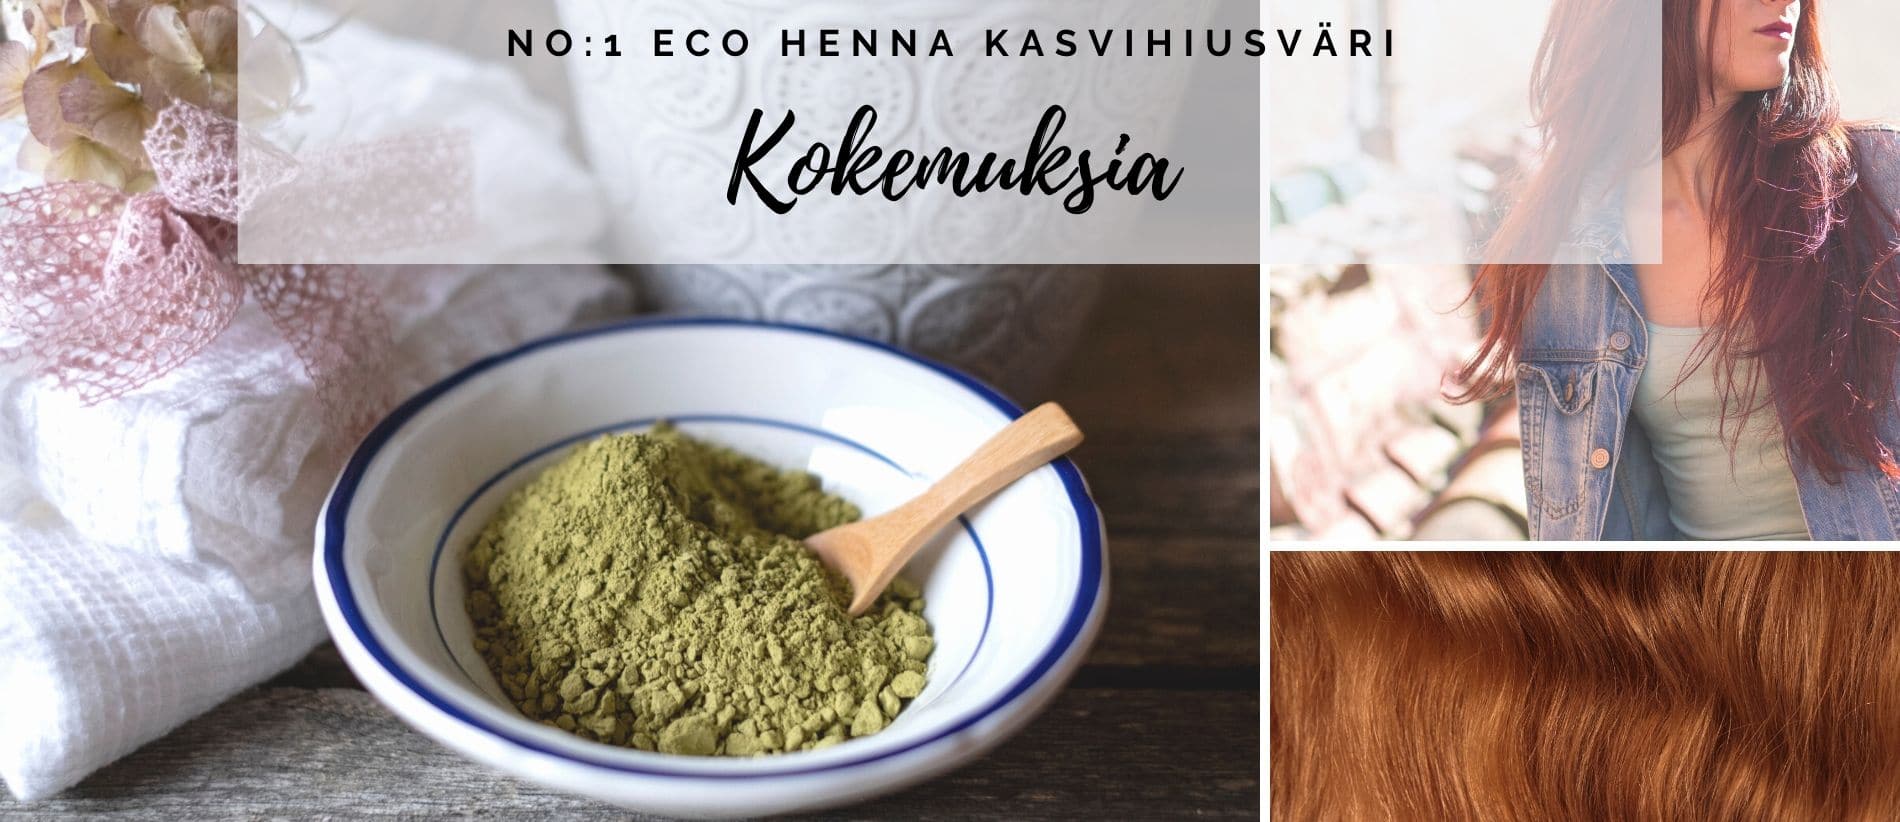 No_1 Eco Henna kasvihiusväri kokemuksia